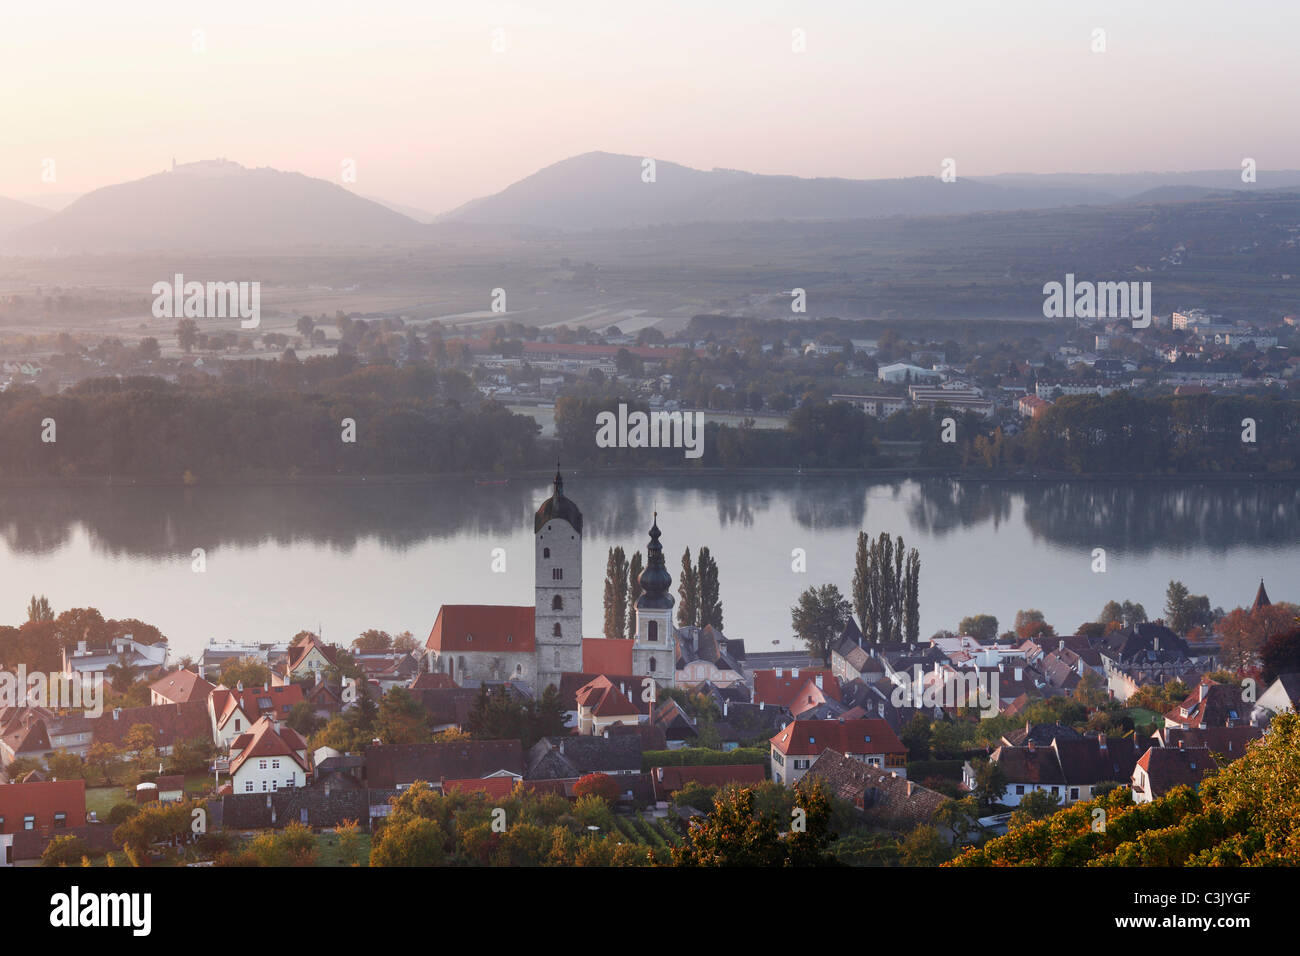 Austria, Lower Austria, Waldviertel, Wachau, Stein an der donau, View of  Danube river and buildings Stock Photo